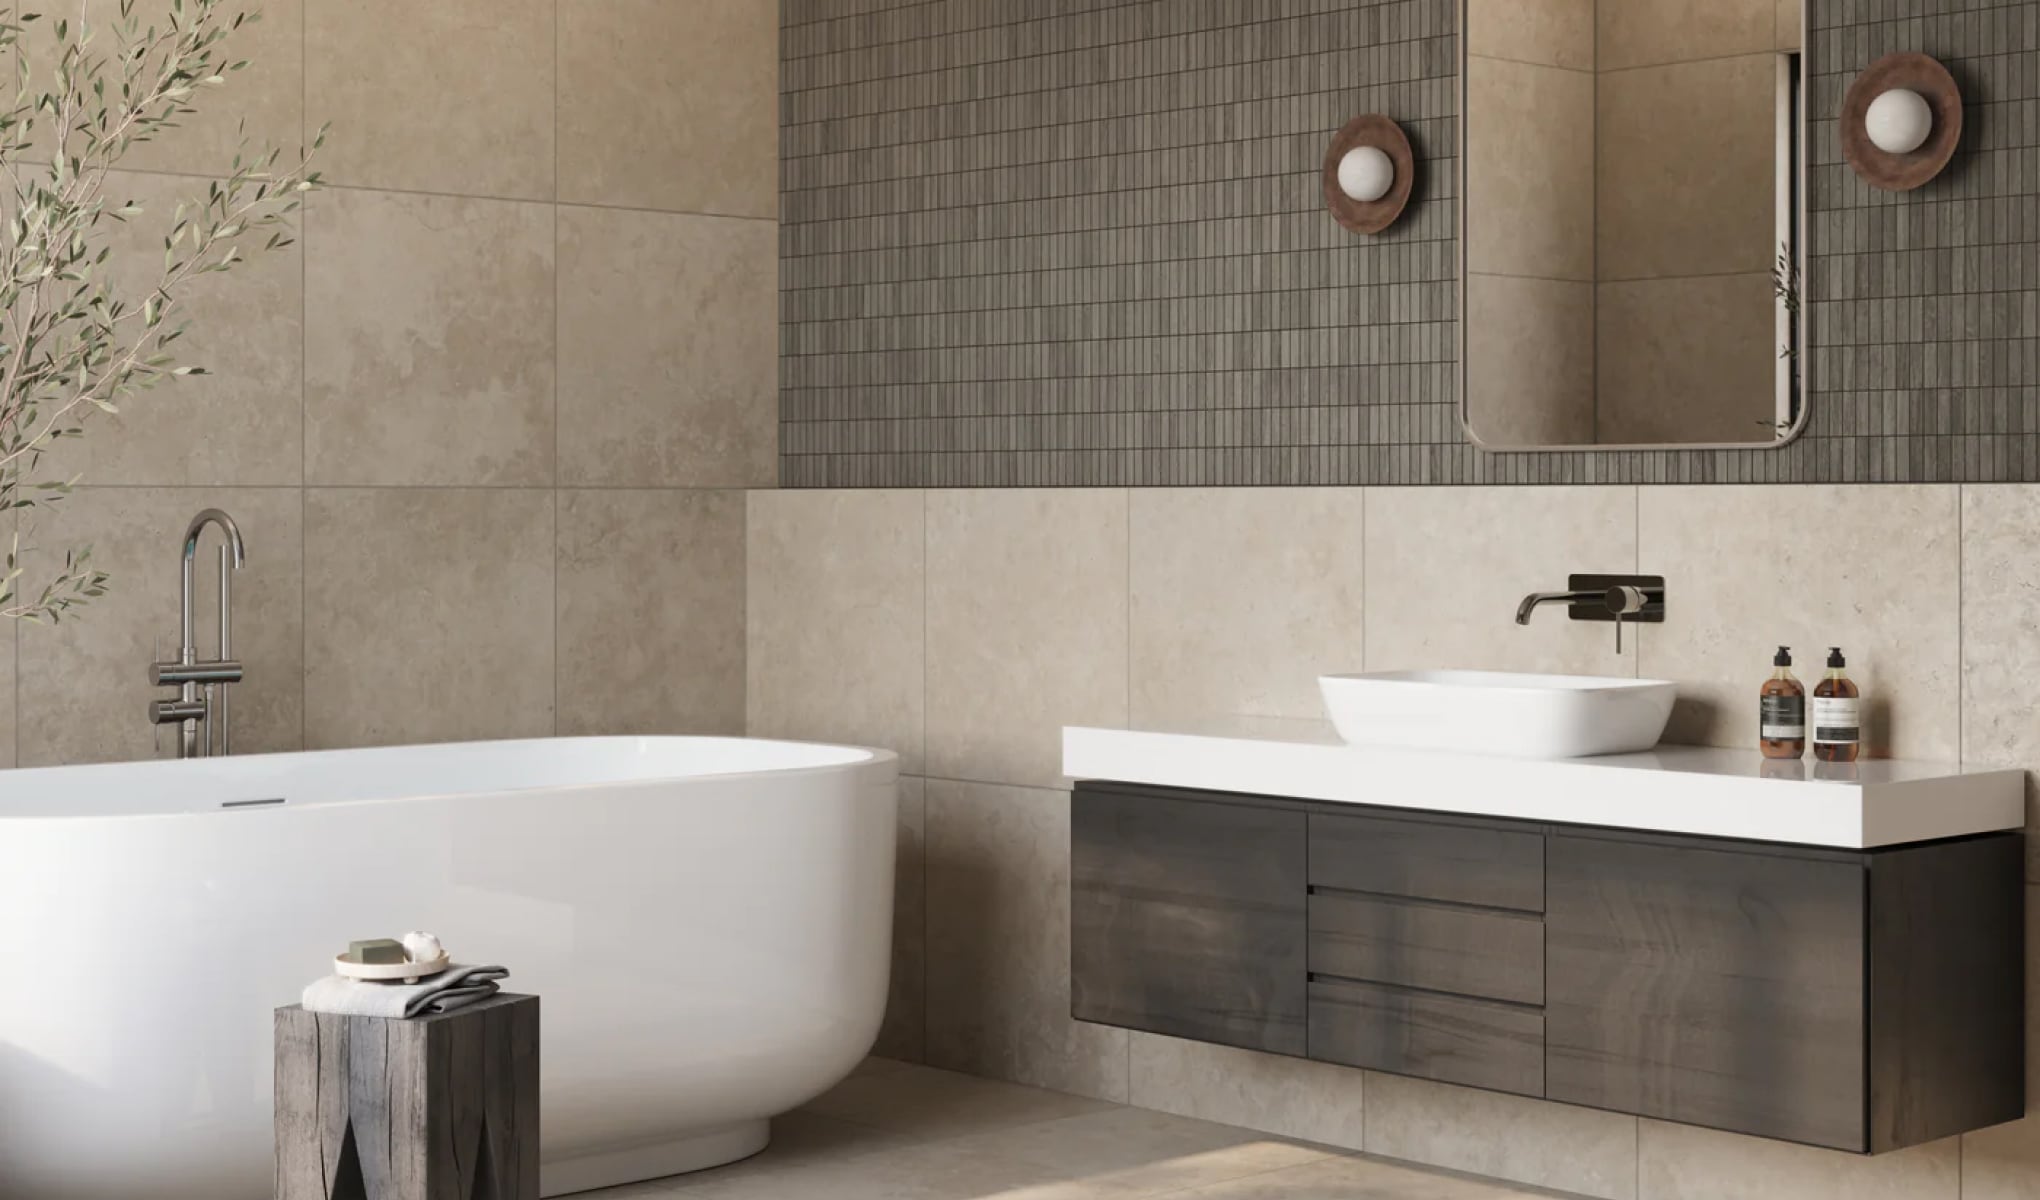 Brown Bathroom Tiles bring a cozy, elegant ambiance, enriching bathroom spaces with warm, natural tones.